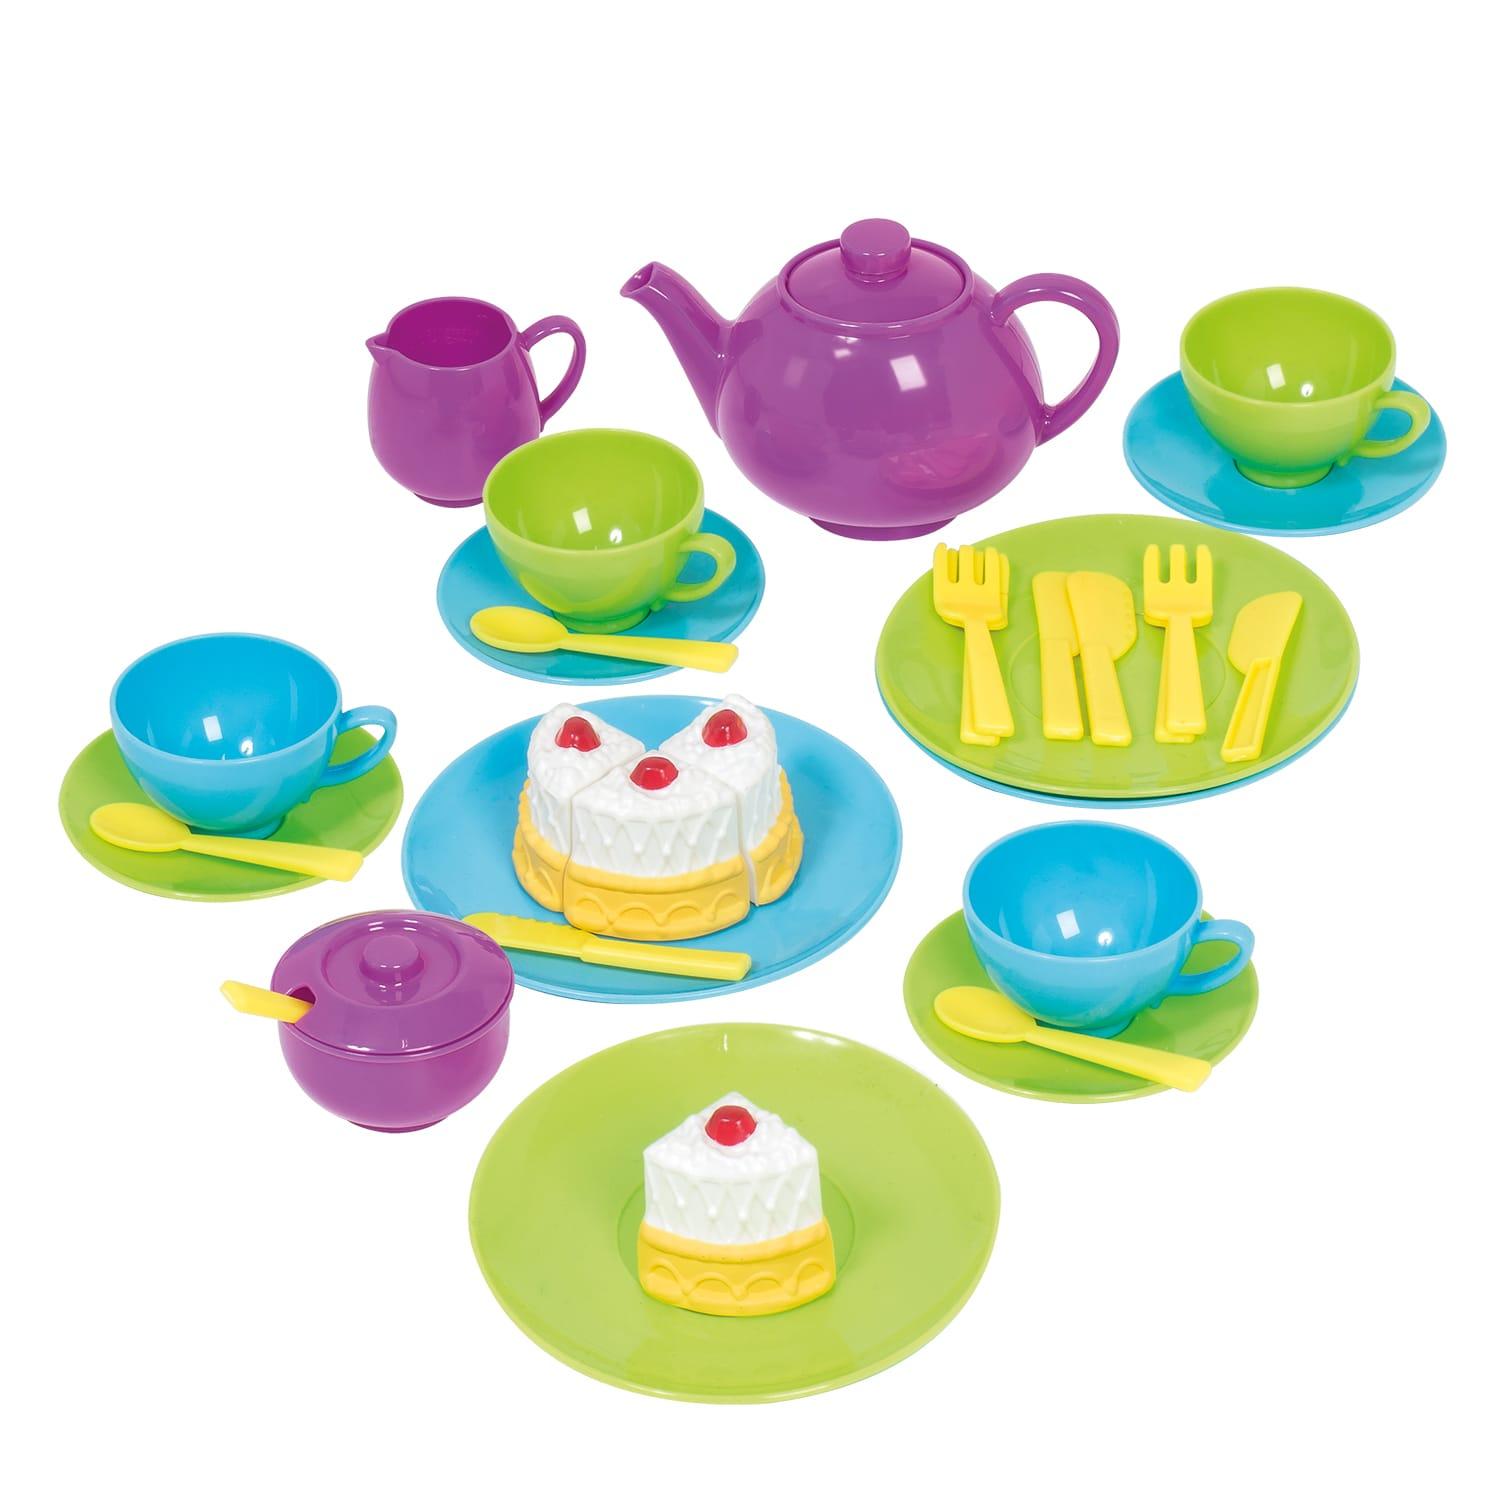 Casdon Pretend Tea Set Kids Play Toy Childrens Playset Plastic Plates 32 Pieces 